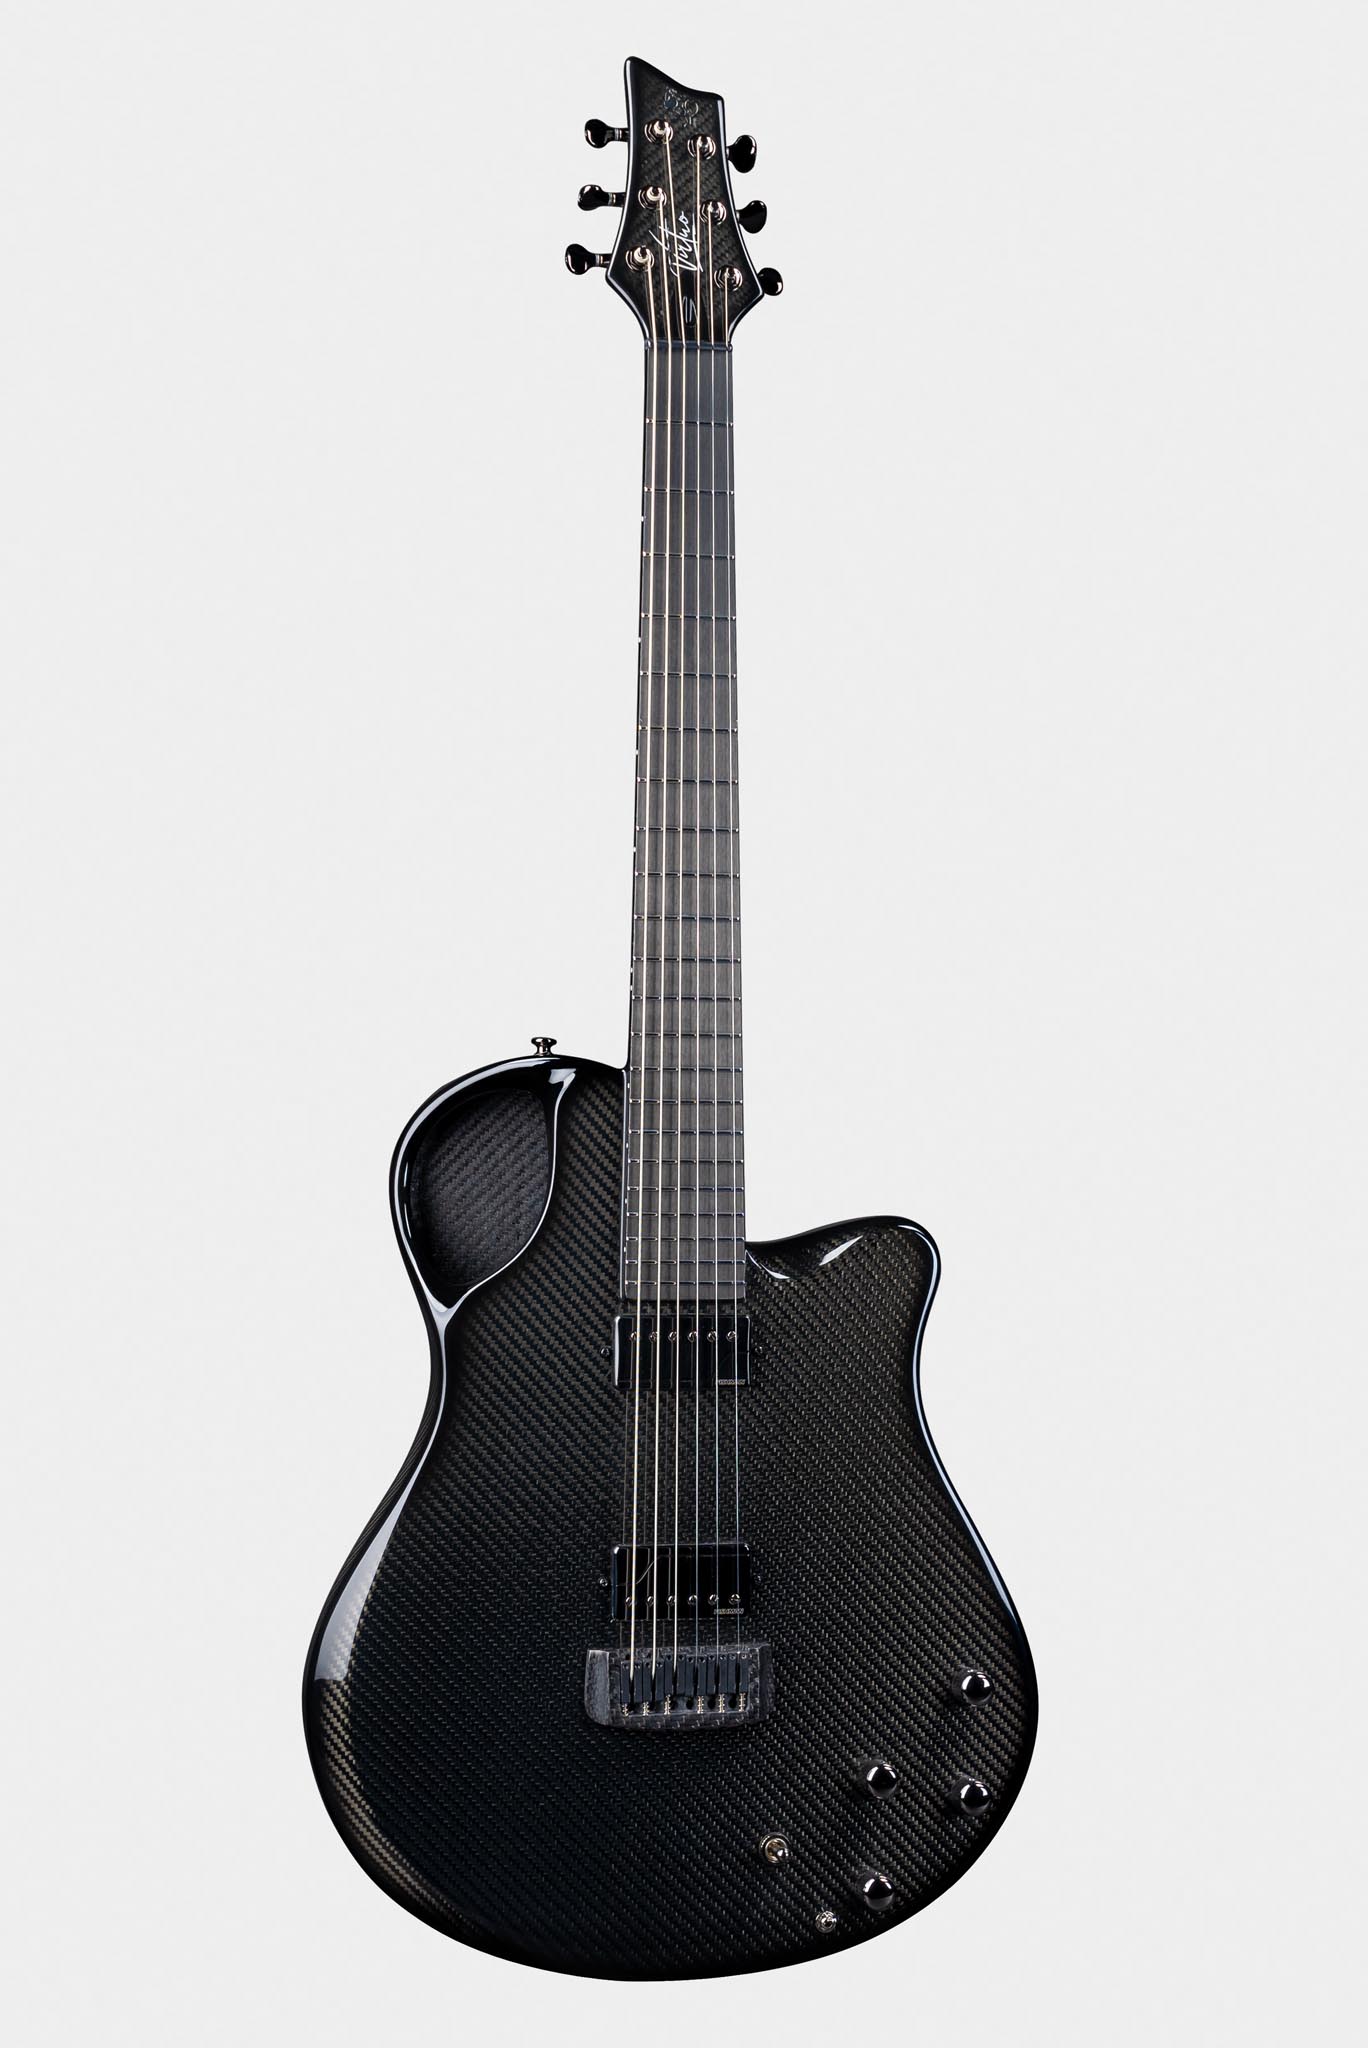 Emerald Virtuo Carbon Fiber Guitar in Black